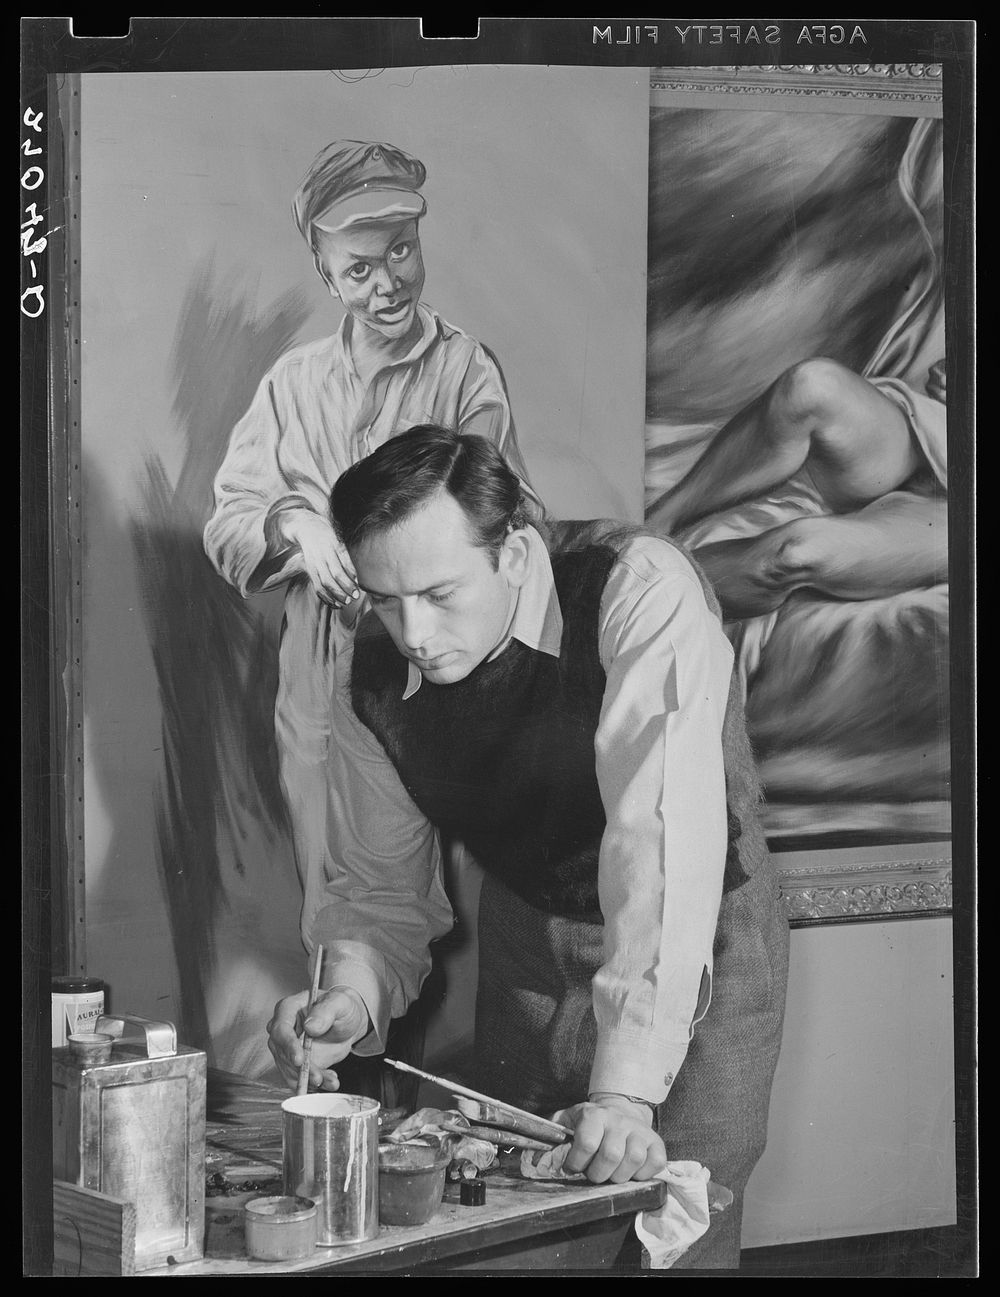 Joe Jones, artist. Saint Louis, Missouri. Sourced from the Library of Congress.